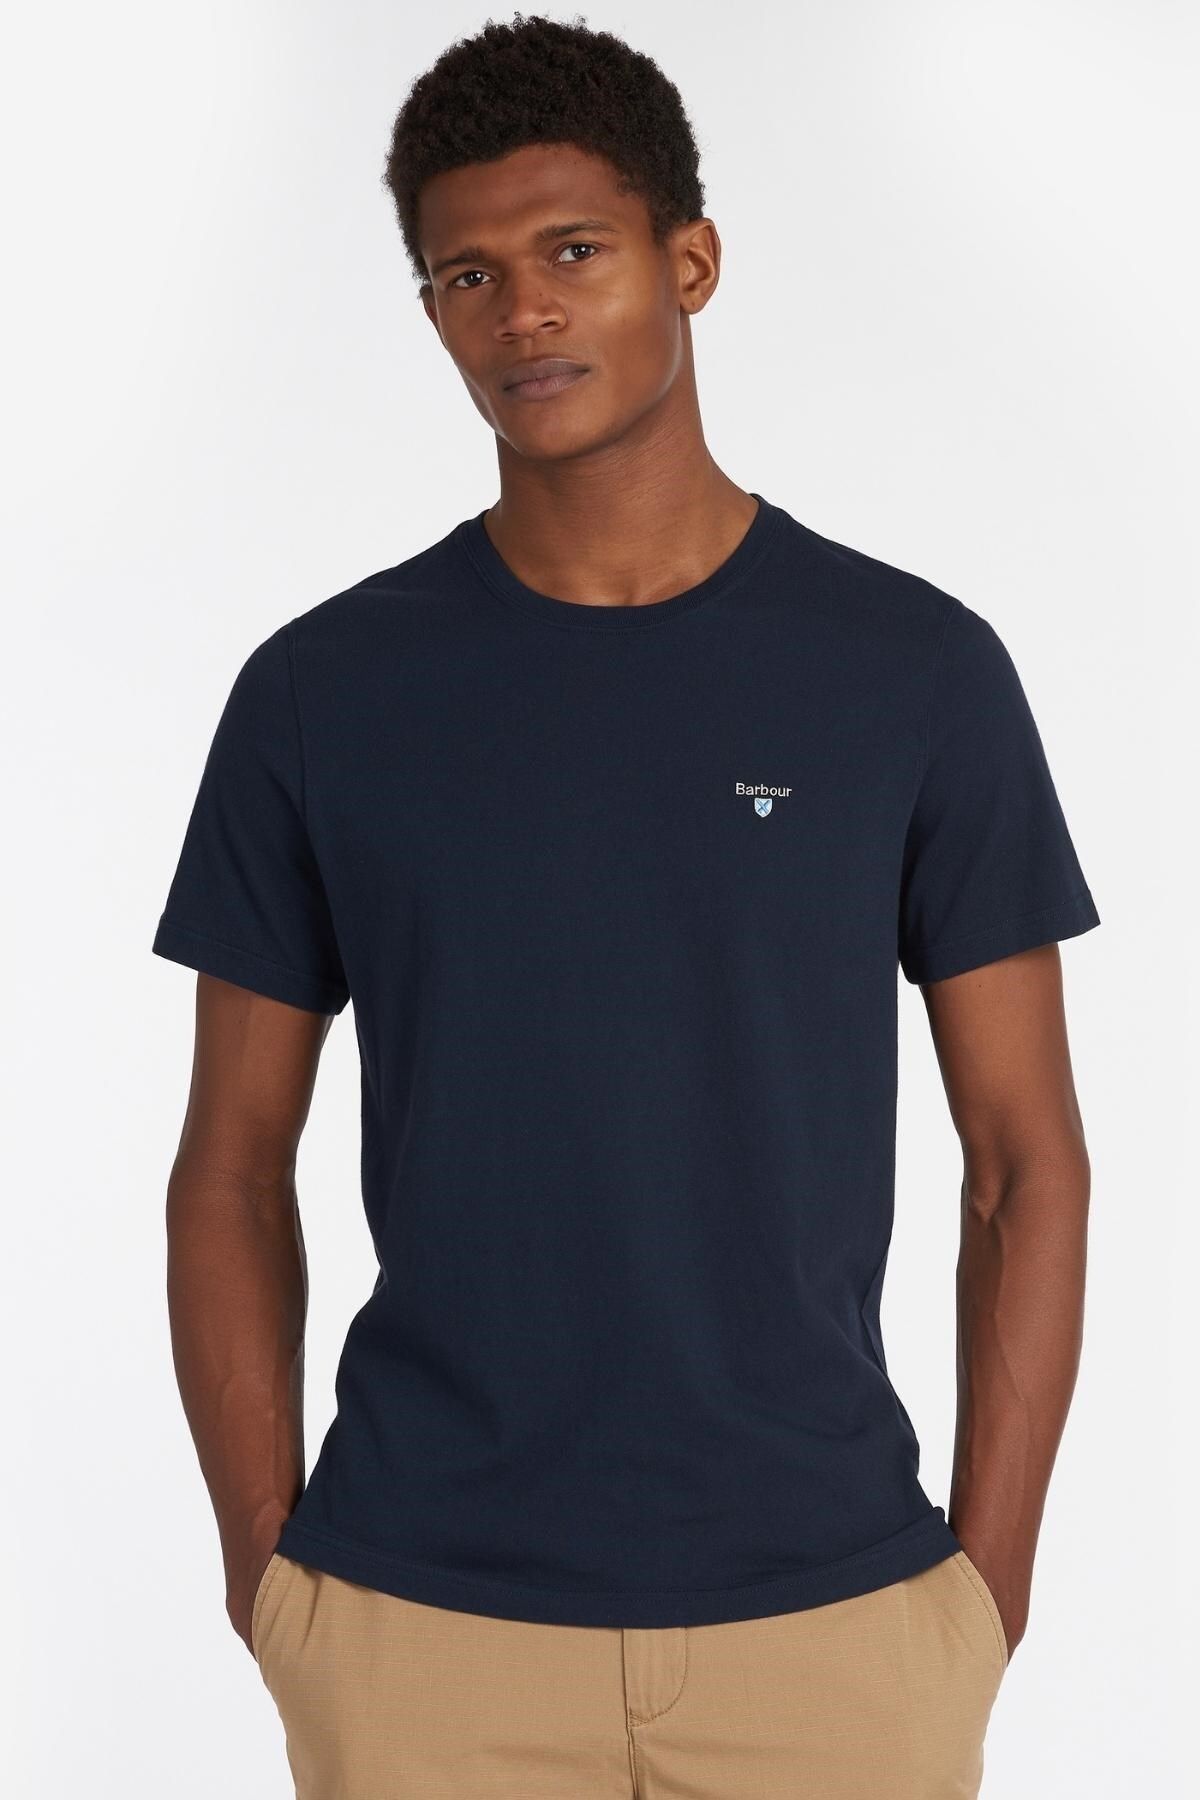 Barbour Tartan Sports T-shirt Ny31 New Navy